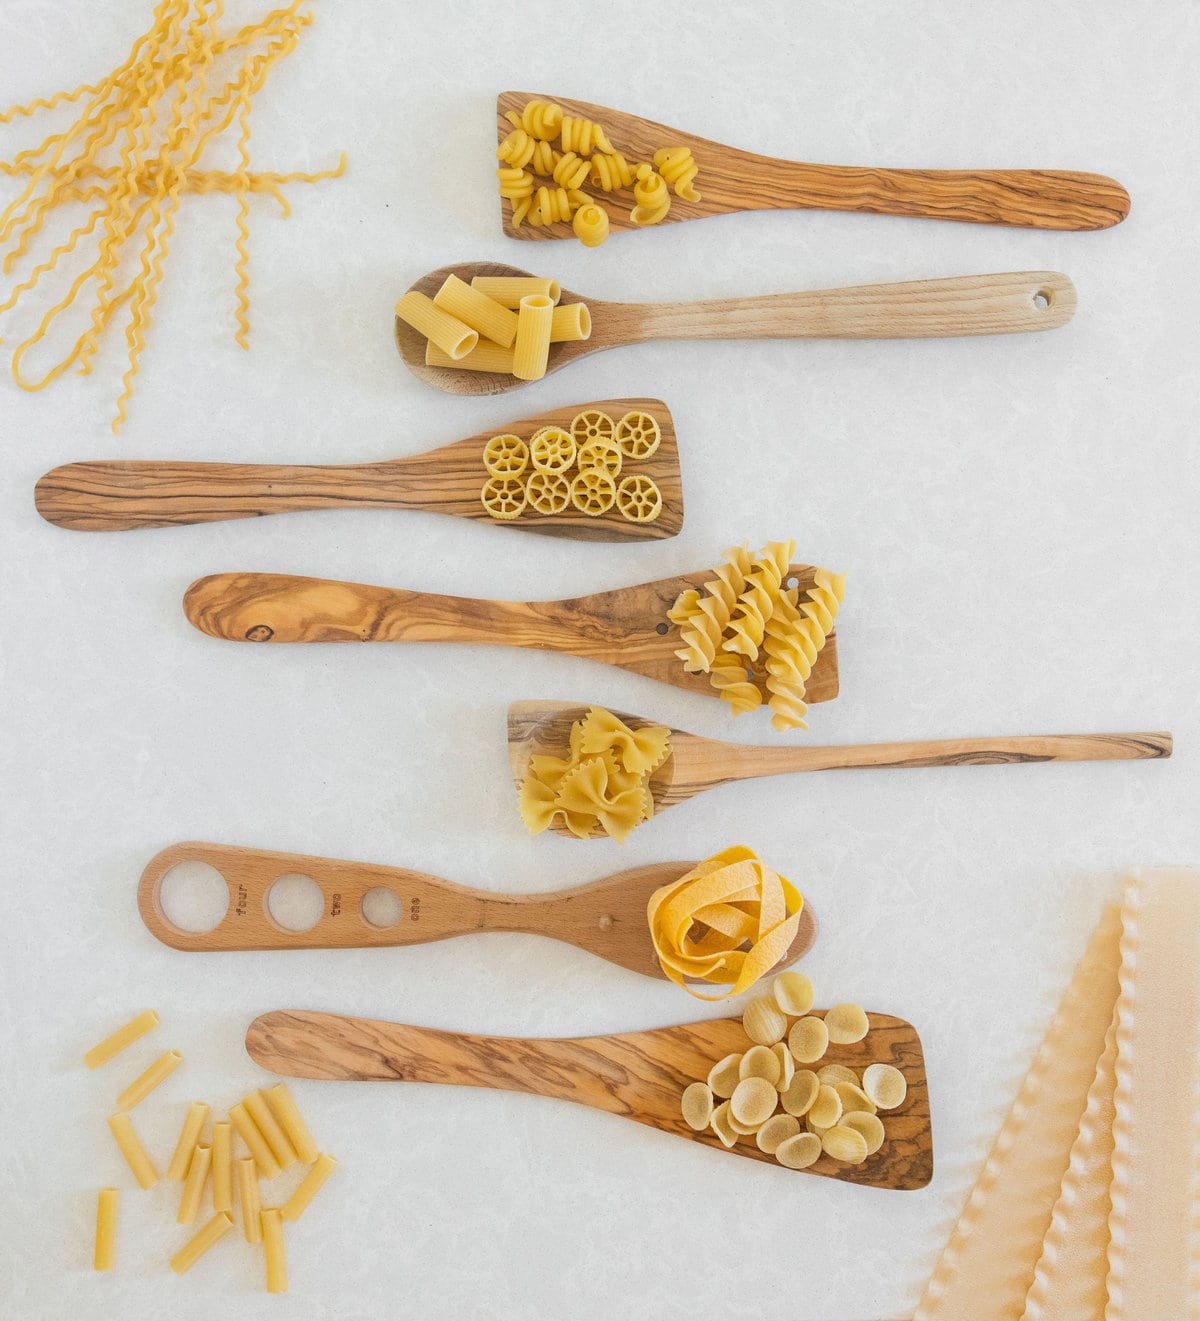 Spaghetti with Mushrooms & Seaweed Small Size Replica (Pencil/Pen Stan